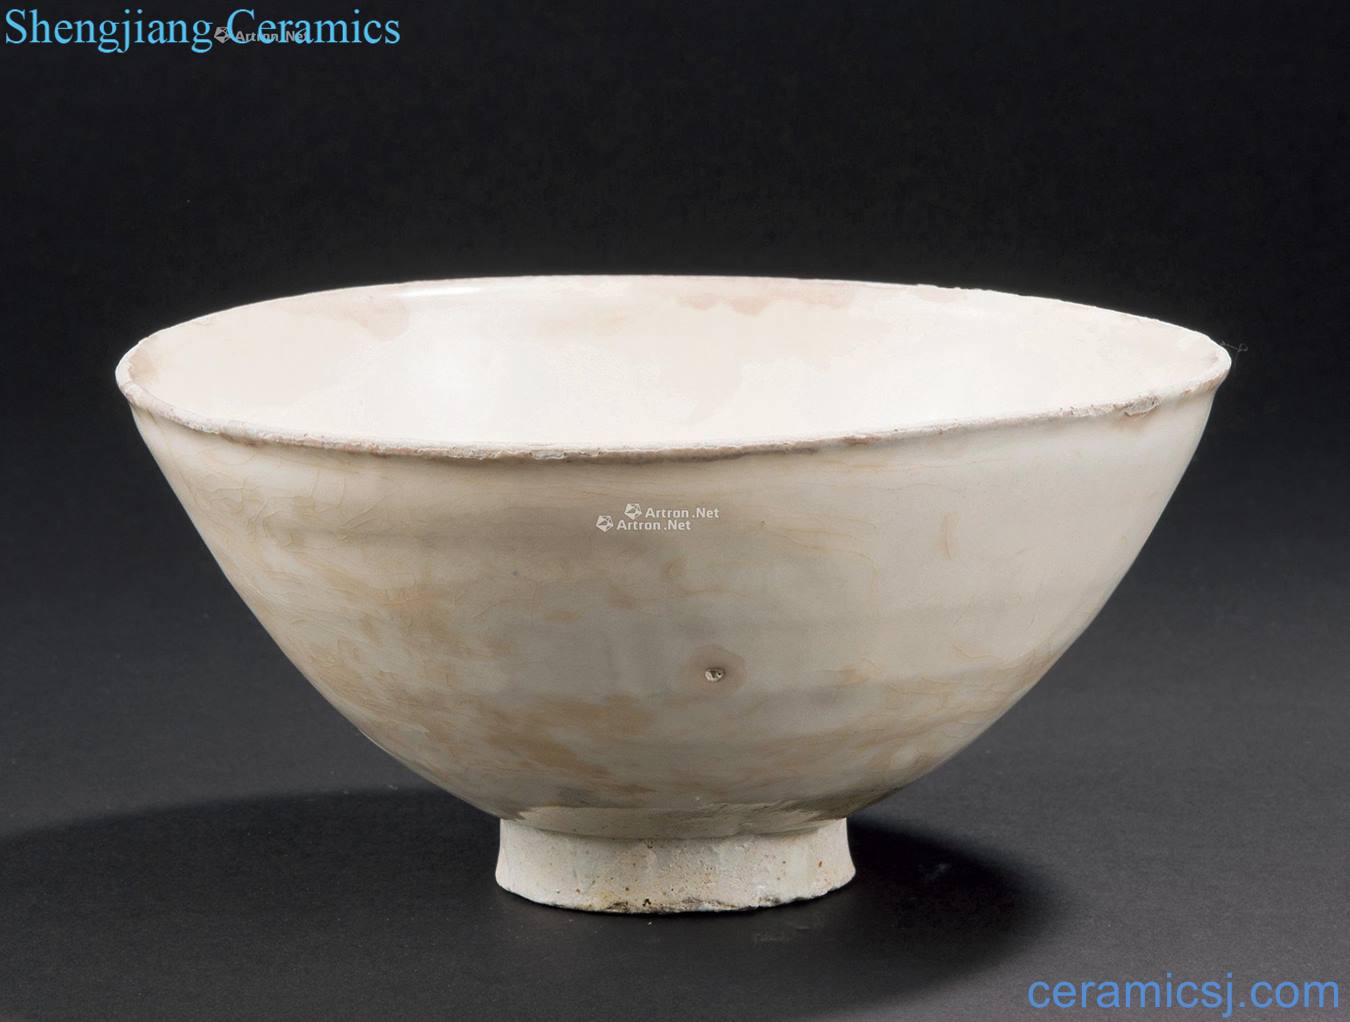 Song magnetic state kiln white glaze bowls